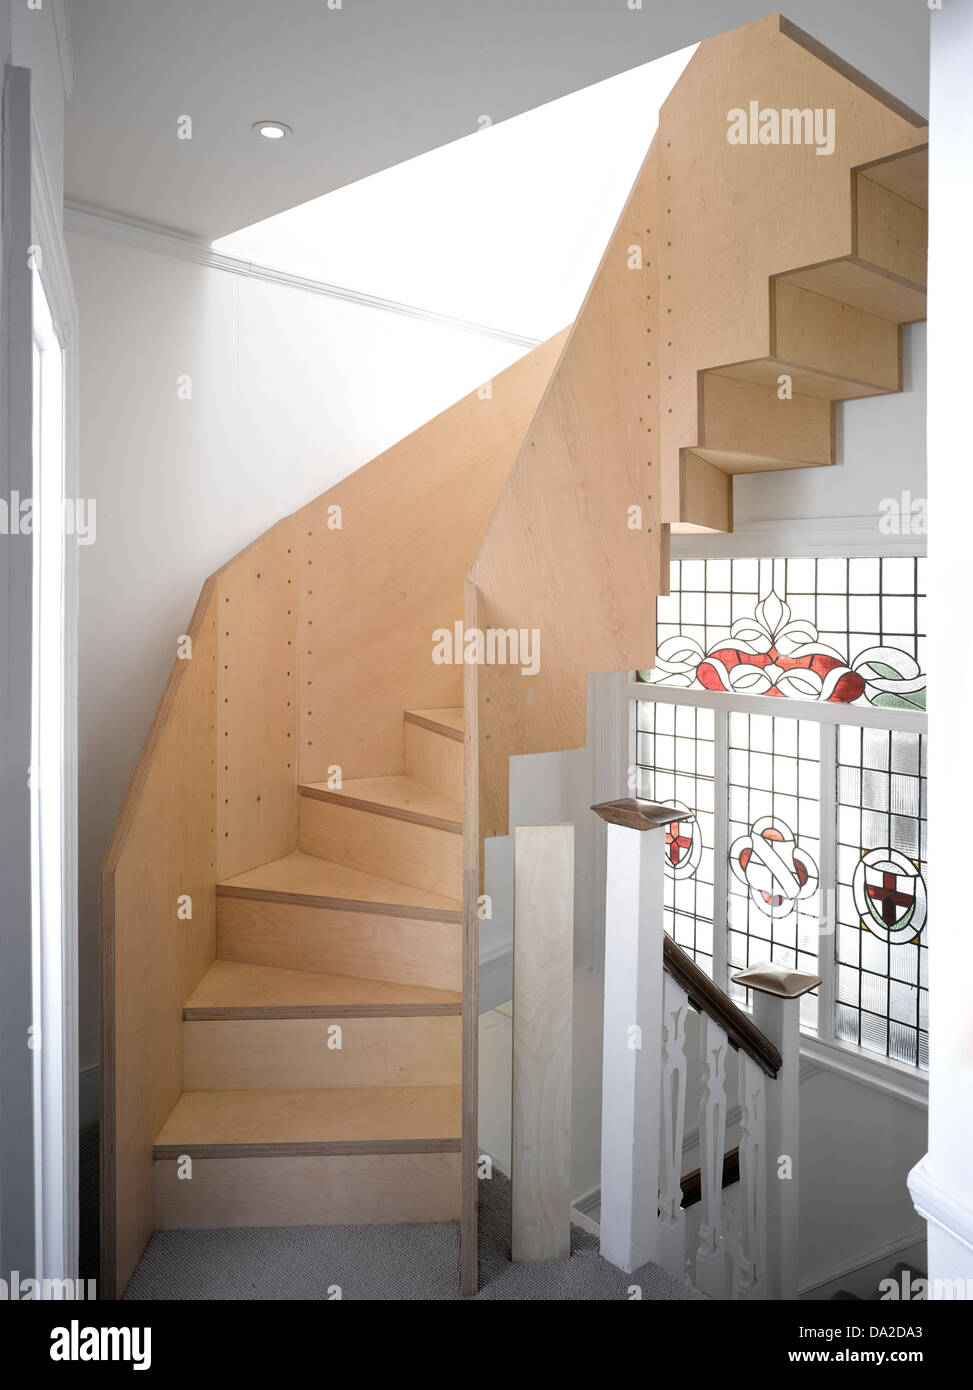 Farrer House, London, United Kingdom. Architect: West Architecture, 2013. Plywood staircase. Stock Photo